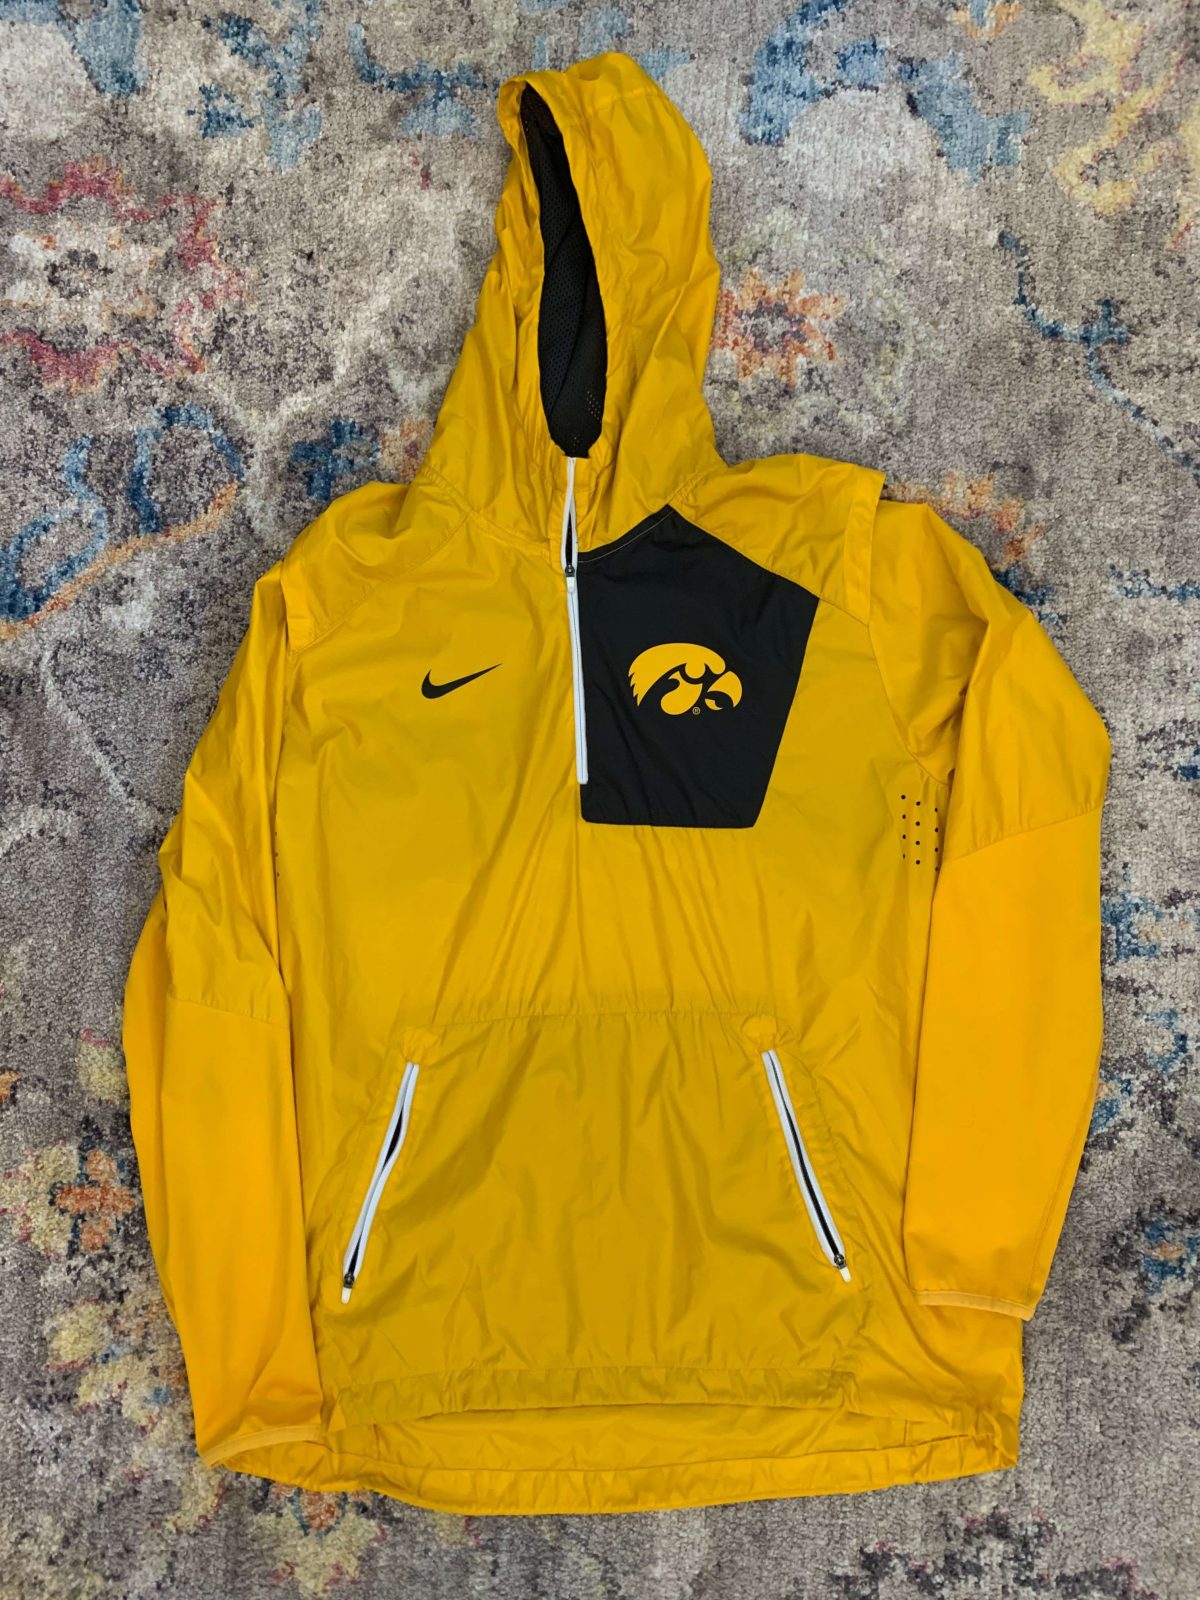 University of Iowa Track & Field Nike Dri-Fit Pullover : NARP Clothing